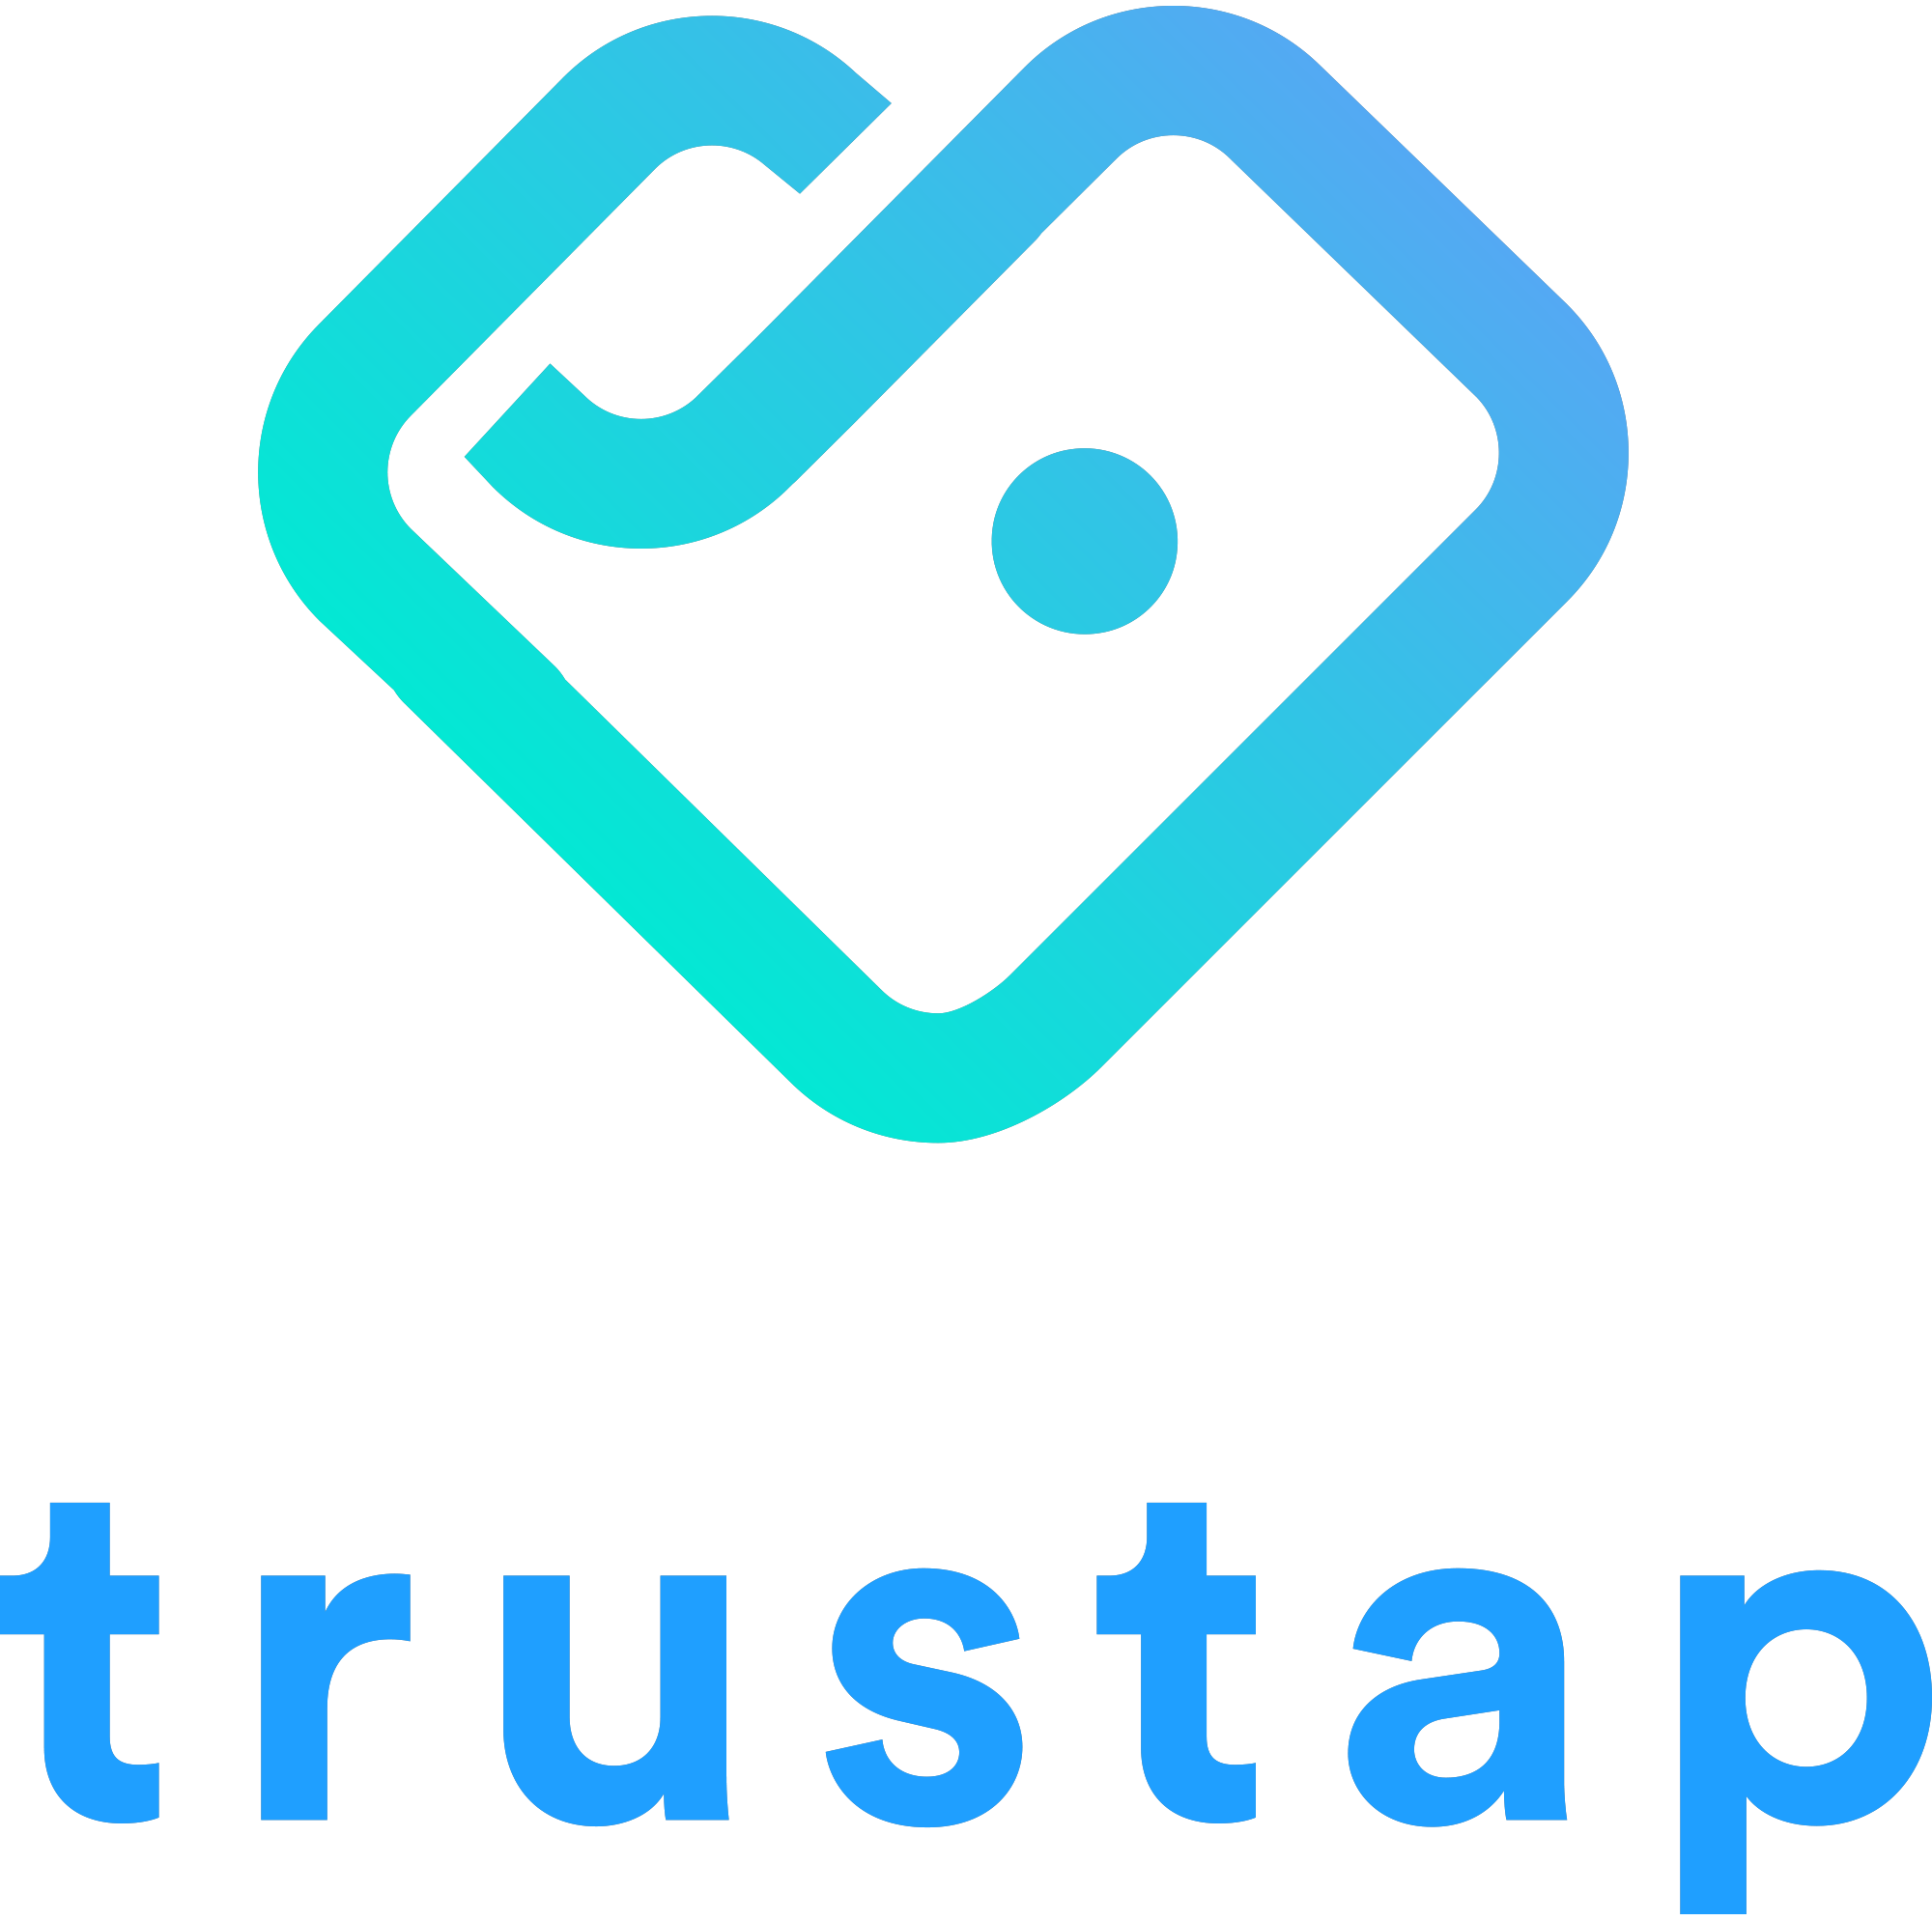 Trustap